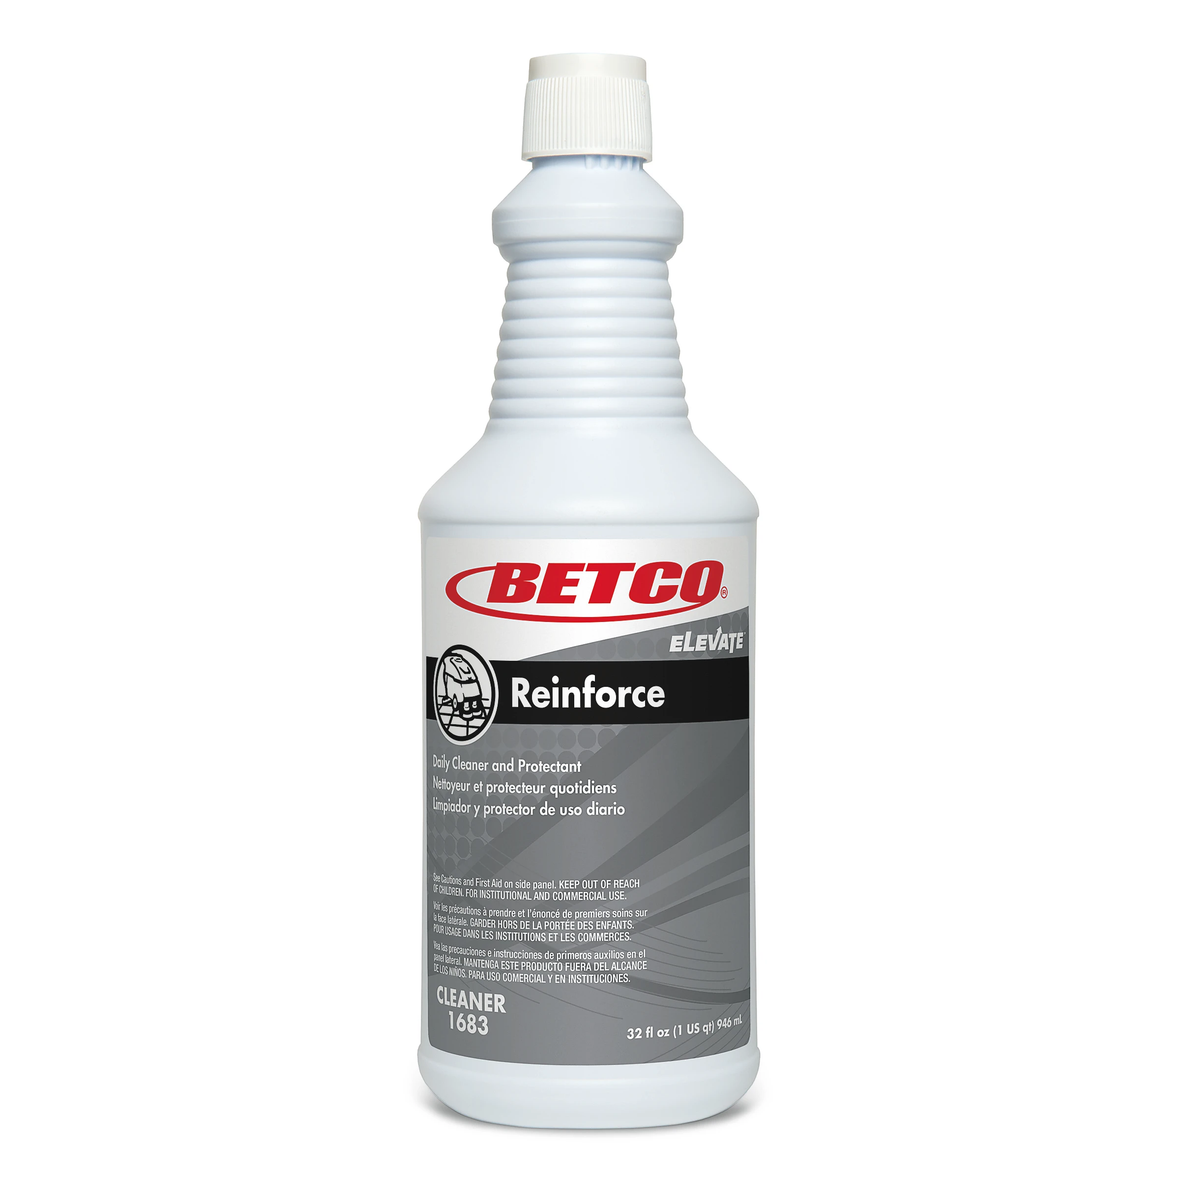 Betco Elevate Reinforce Cleaner, Citrus Scent, 32 Oz Bottle, Case Of 12